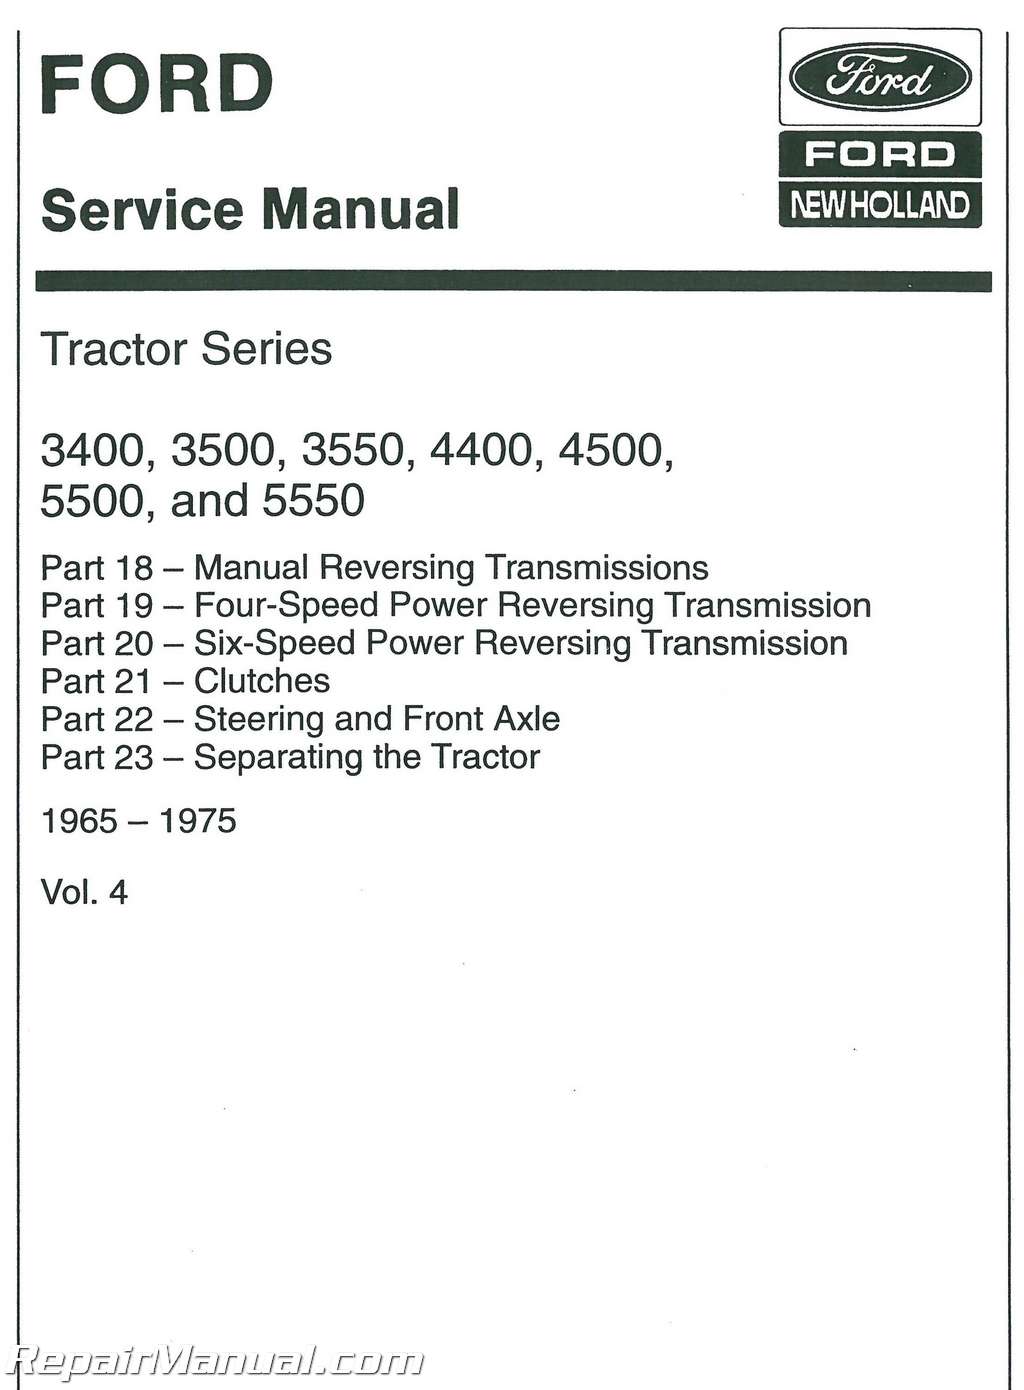 Ford Tractor Operators Manual 3400 3500 3550 4400 4500 FO-O-34,3500 